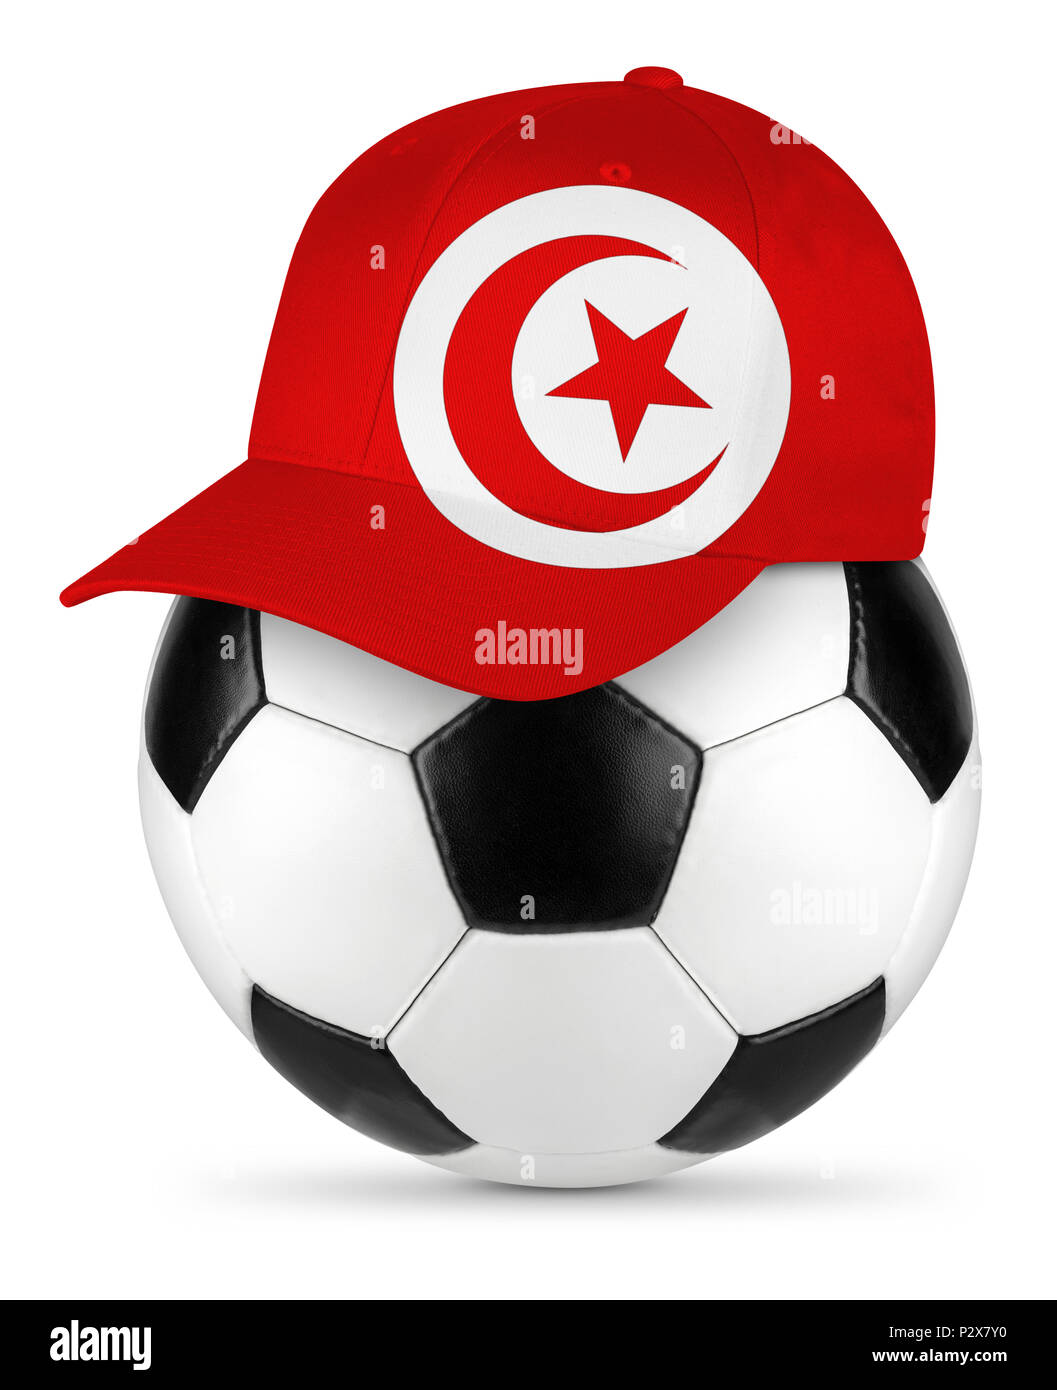 Classic black white leather soccer ball tunisia tunisia flag baseball fan cap isolated background sport football concept Stock Photo